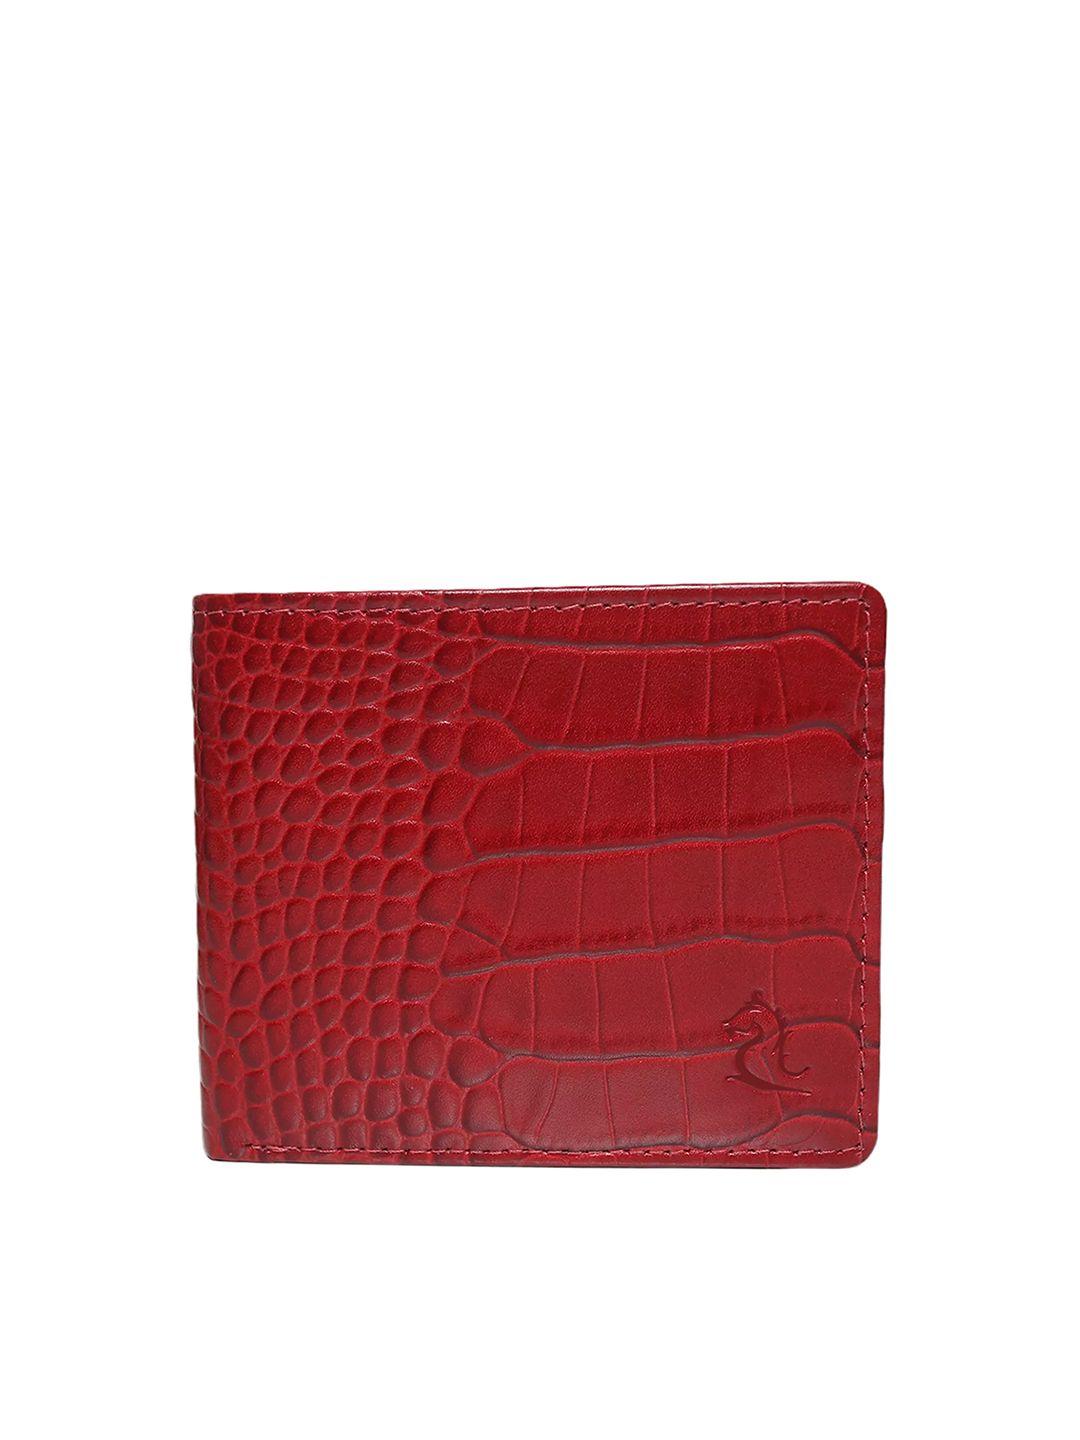 kara men red textured leather two fold wallet